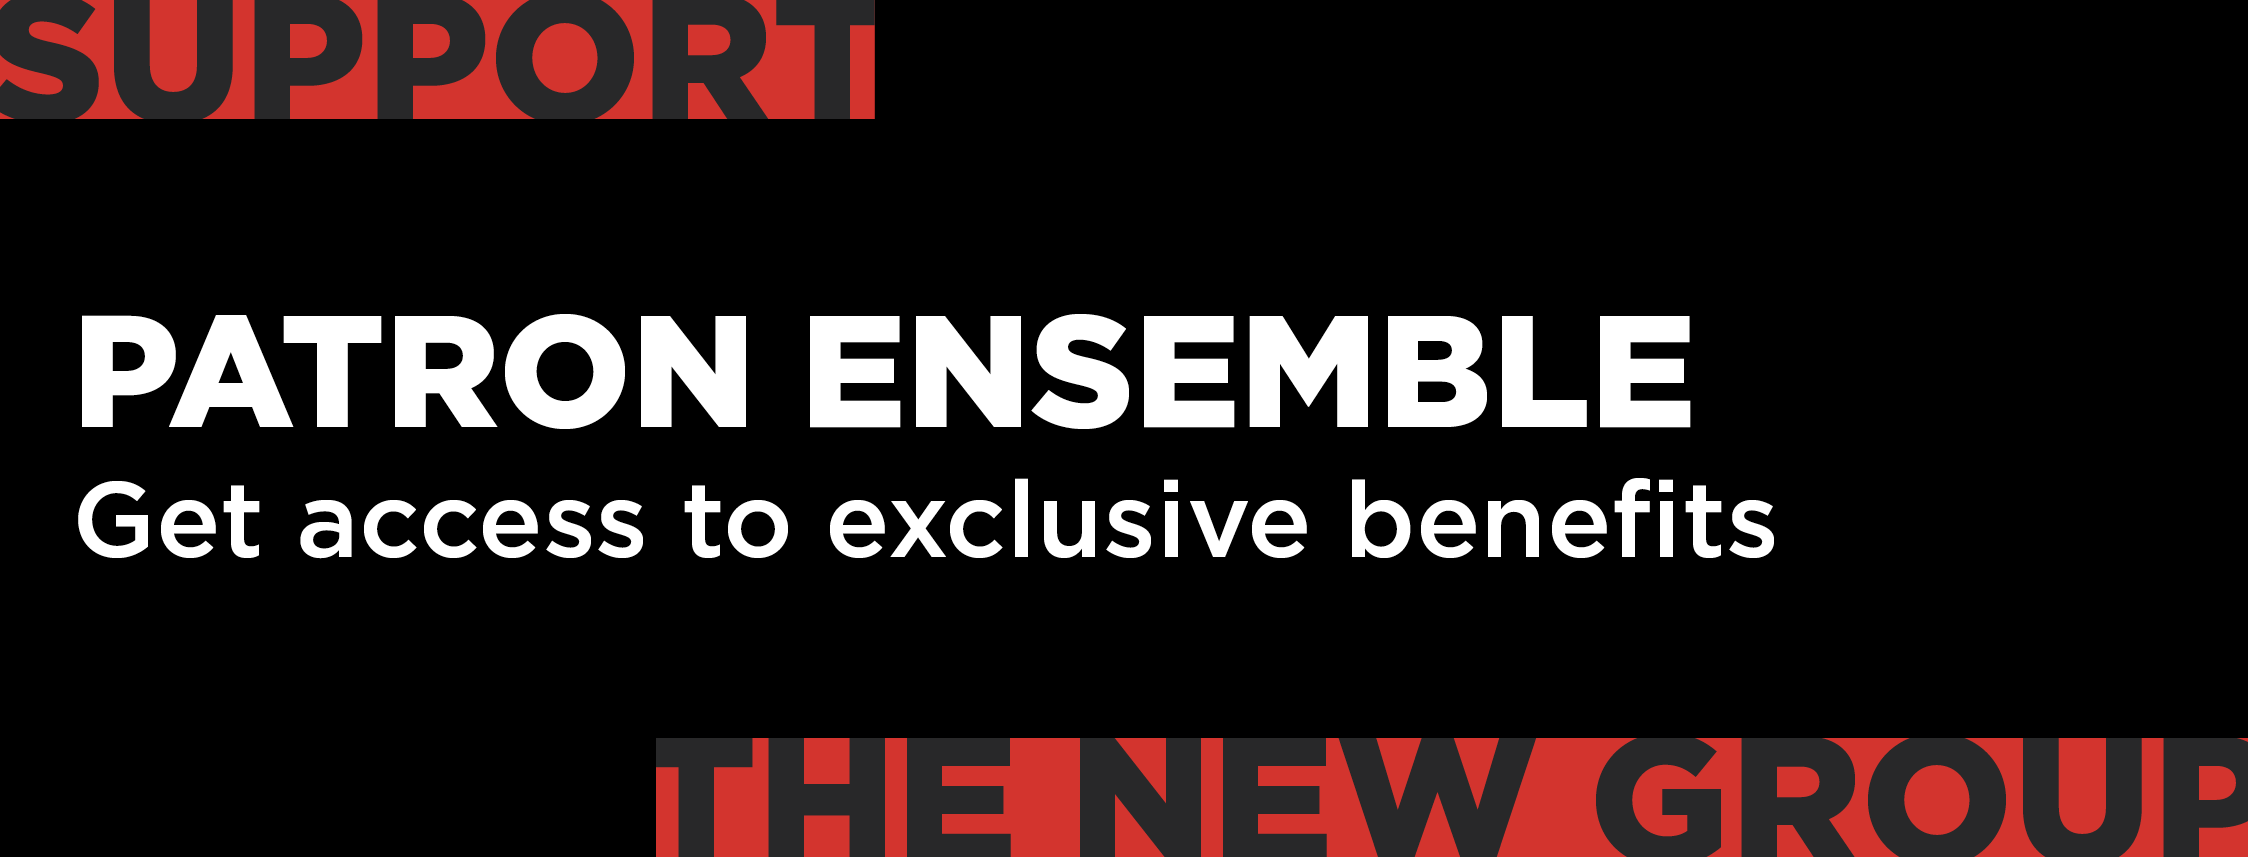 Patron Ensemble - Get access to exclusive benefits